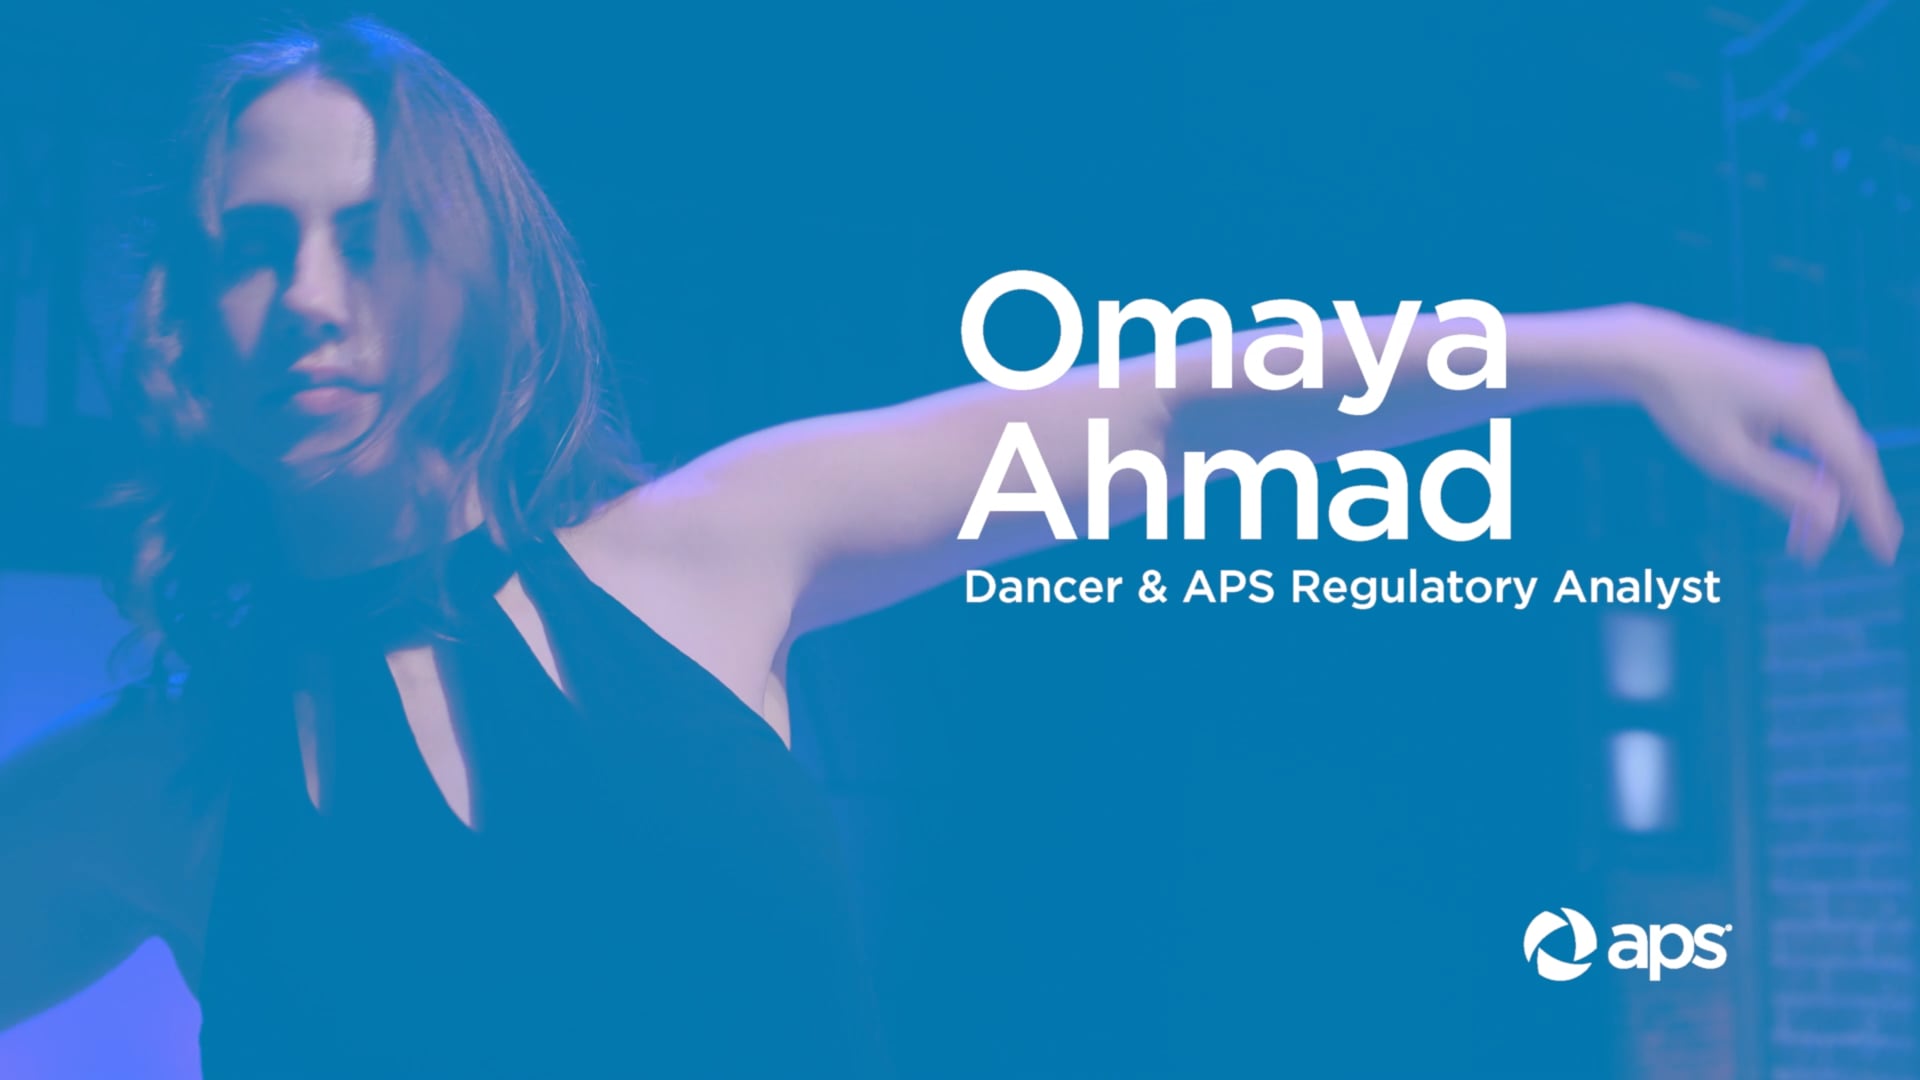 APS Regulatory Analyst. Dancer. Omaya Ahmad